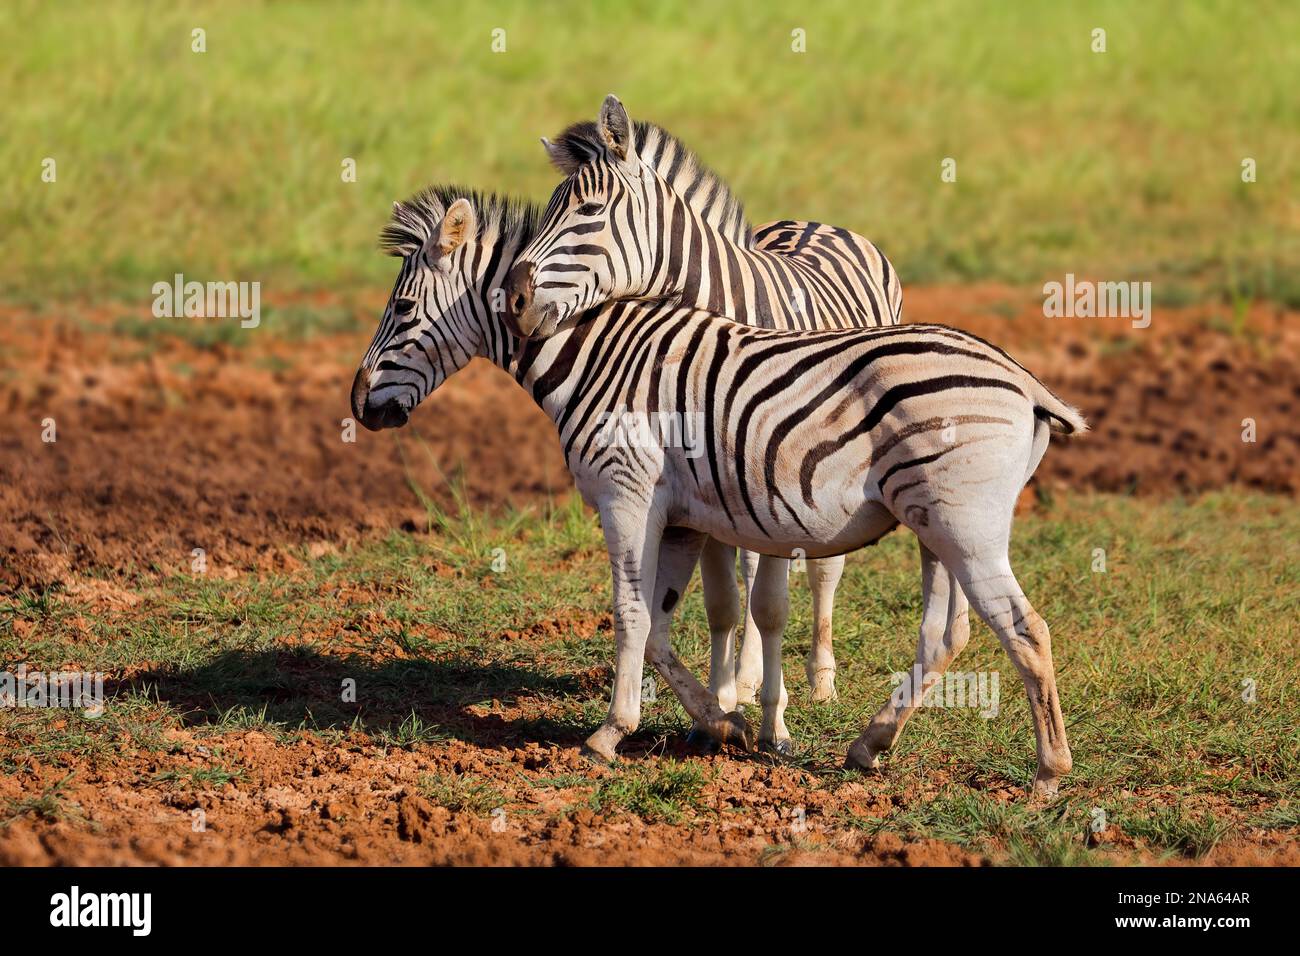 Dos cebras de llanuras (Equus burchelli) en hábitat natural, Parque Nacional Mokala, Sudáfrica Foto de stock